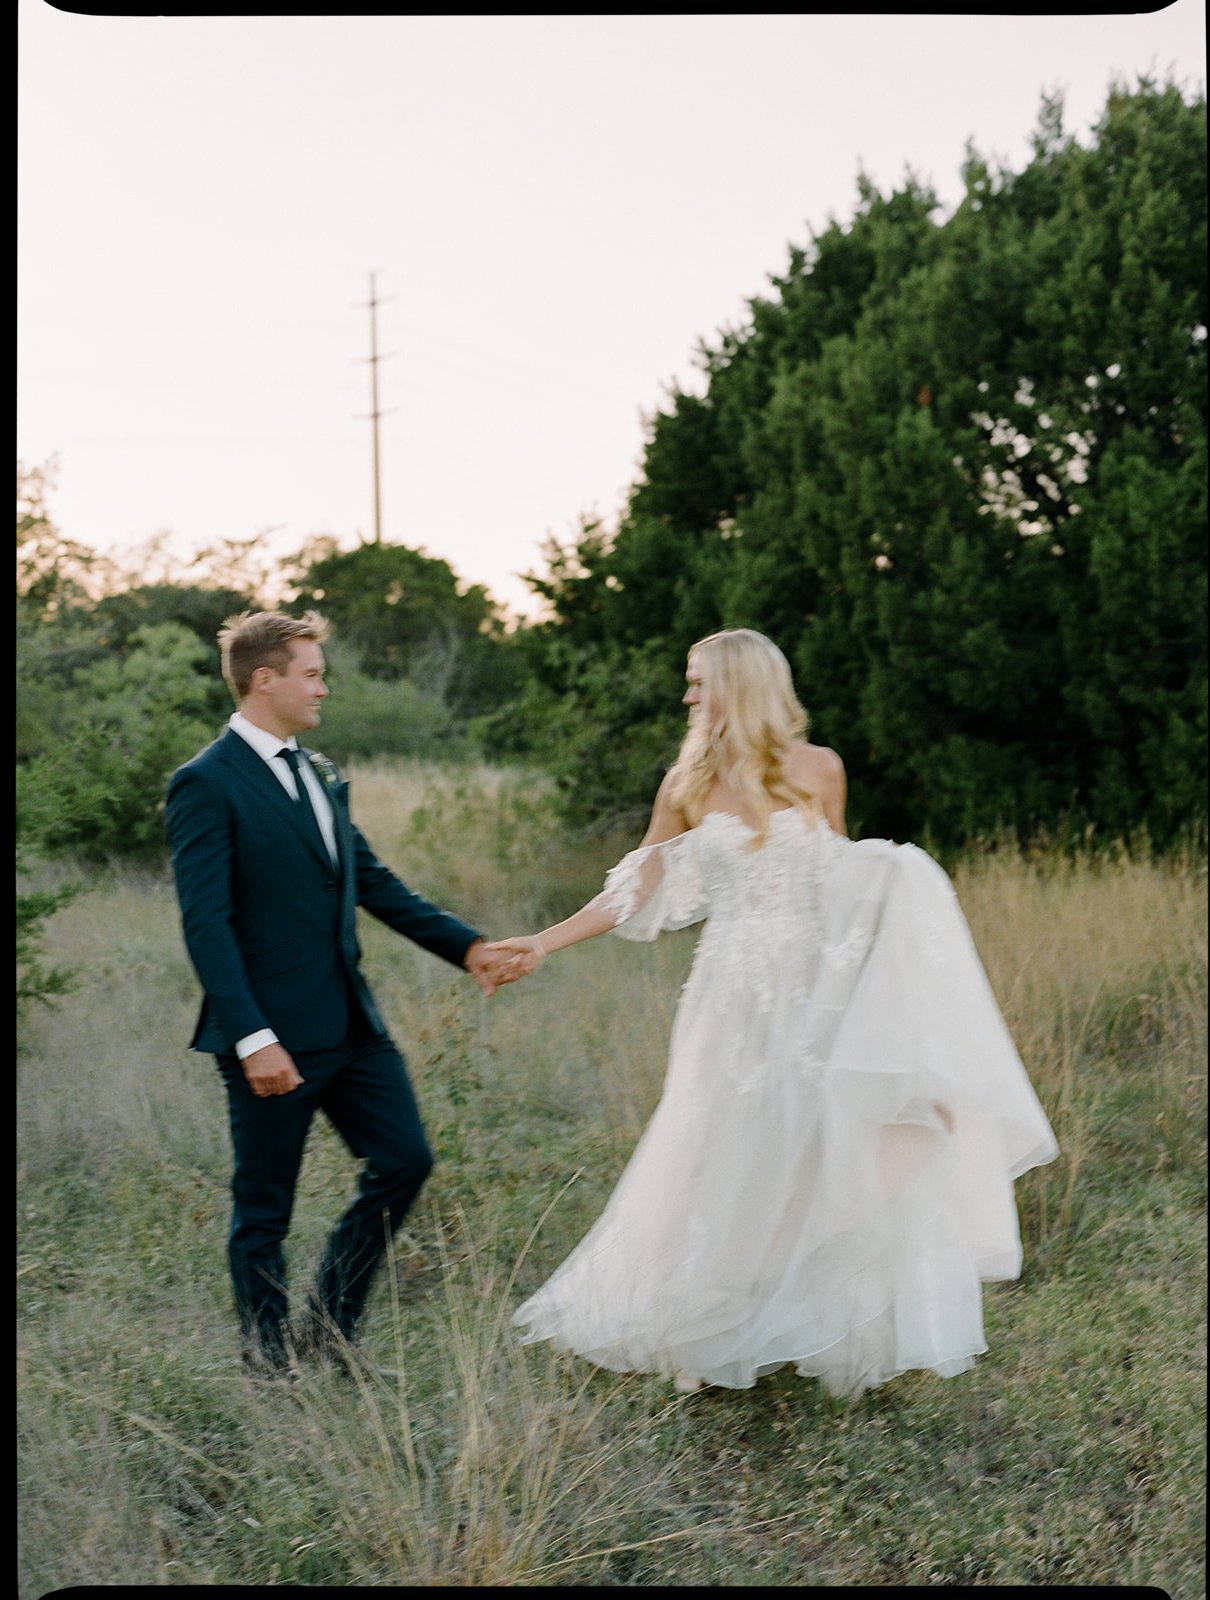 Best-Austin-Wedding-Photographers-Elopement-Film-35mm-Asheville-Santa-Barbara-Backyard-115.jpg